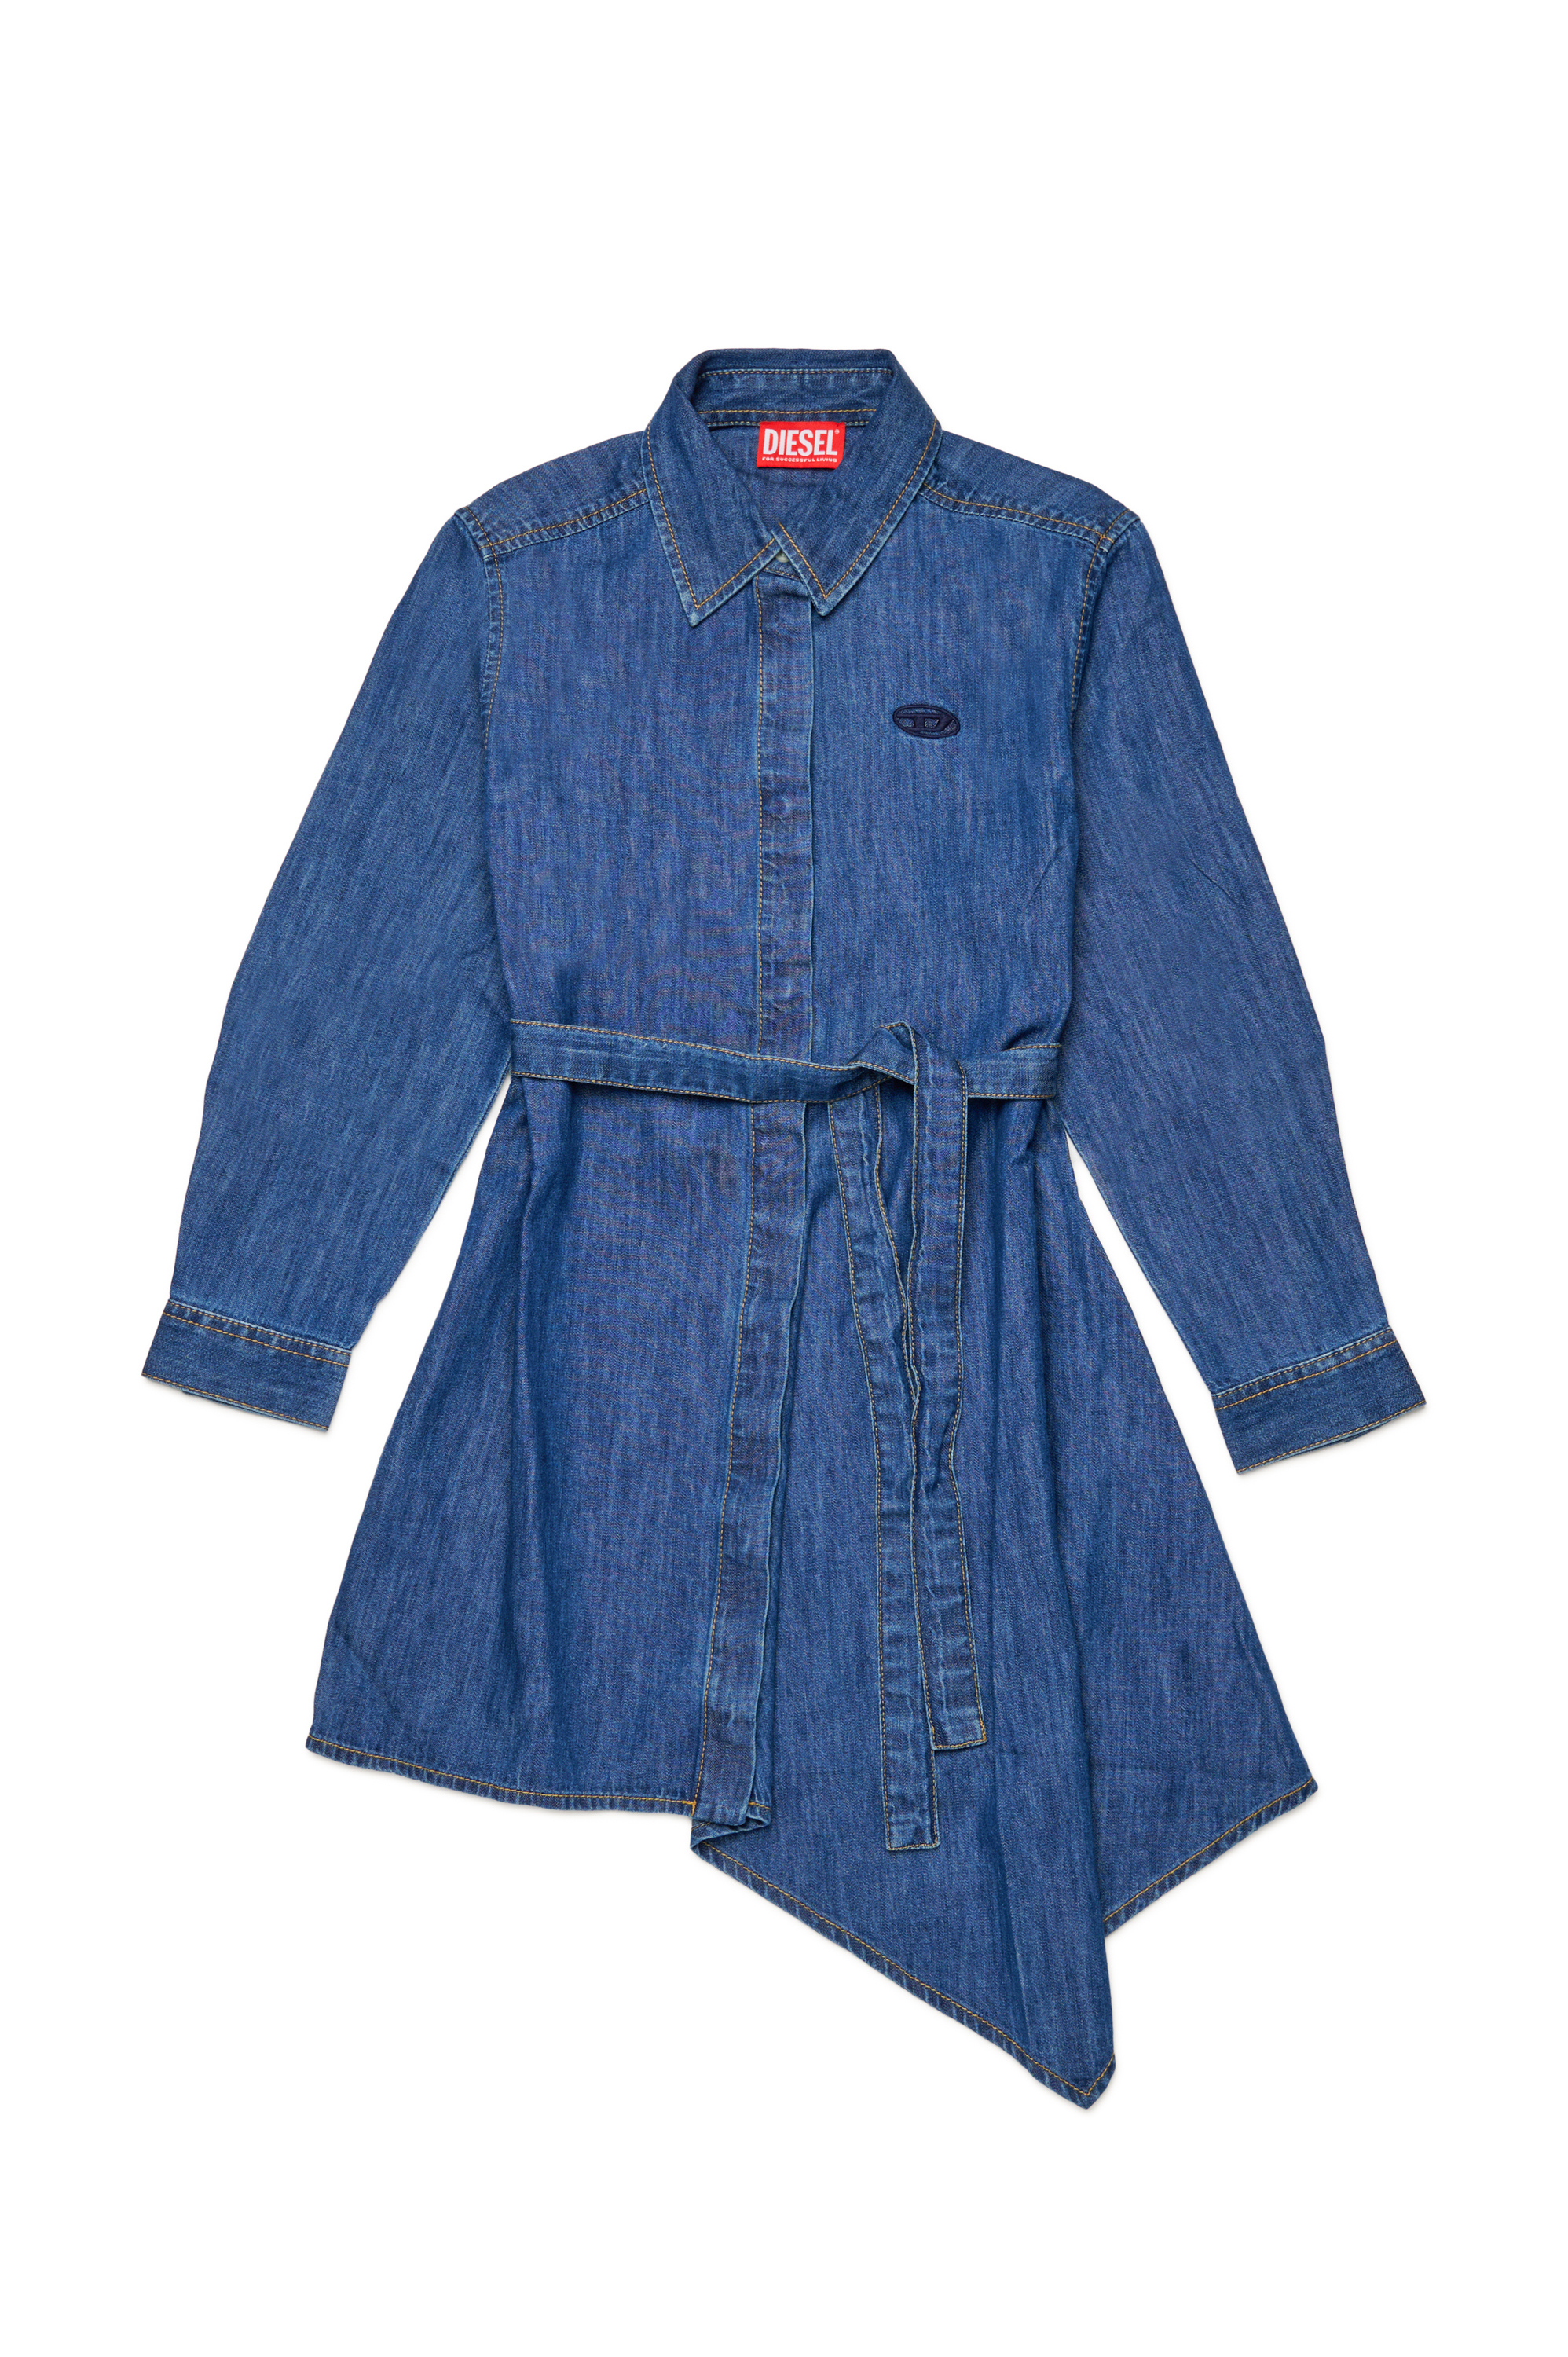 Diesel - DETRISS, Female Denim shirt dress with asymmetric hem in ブルー - Image 1